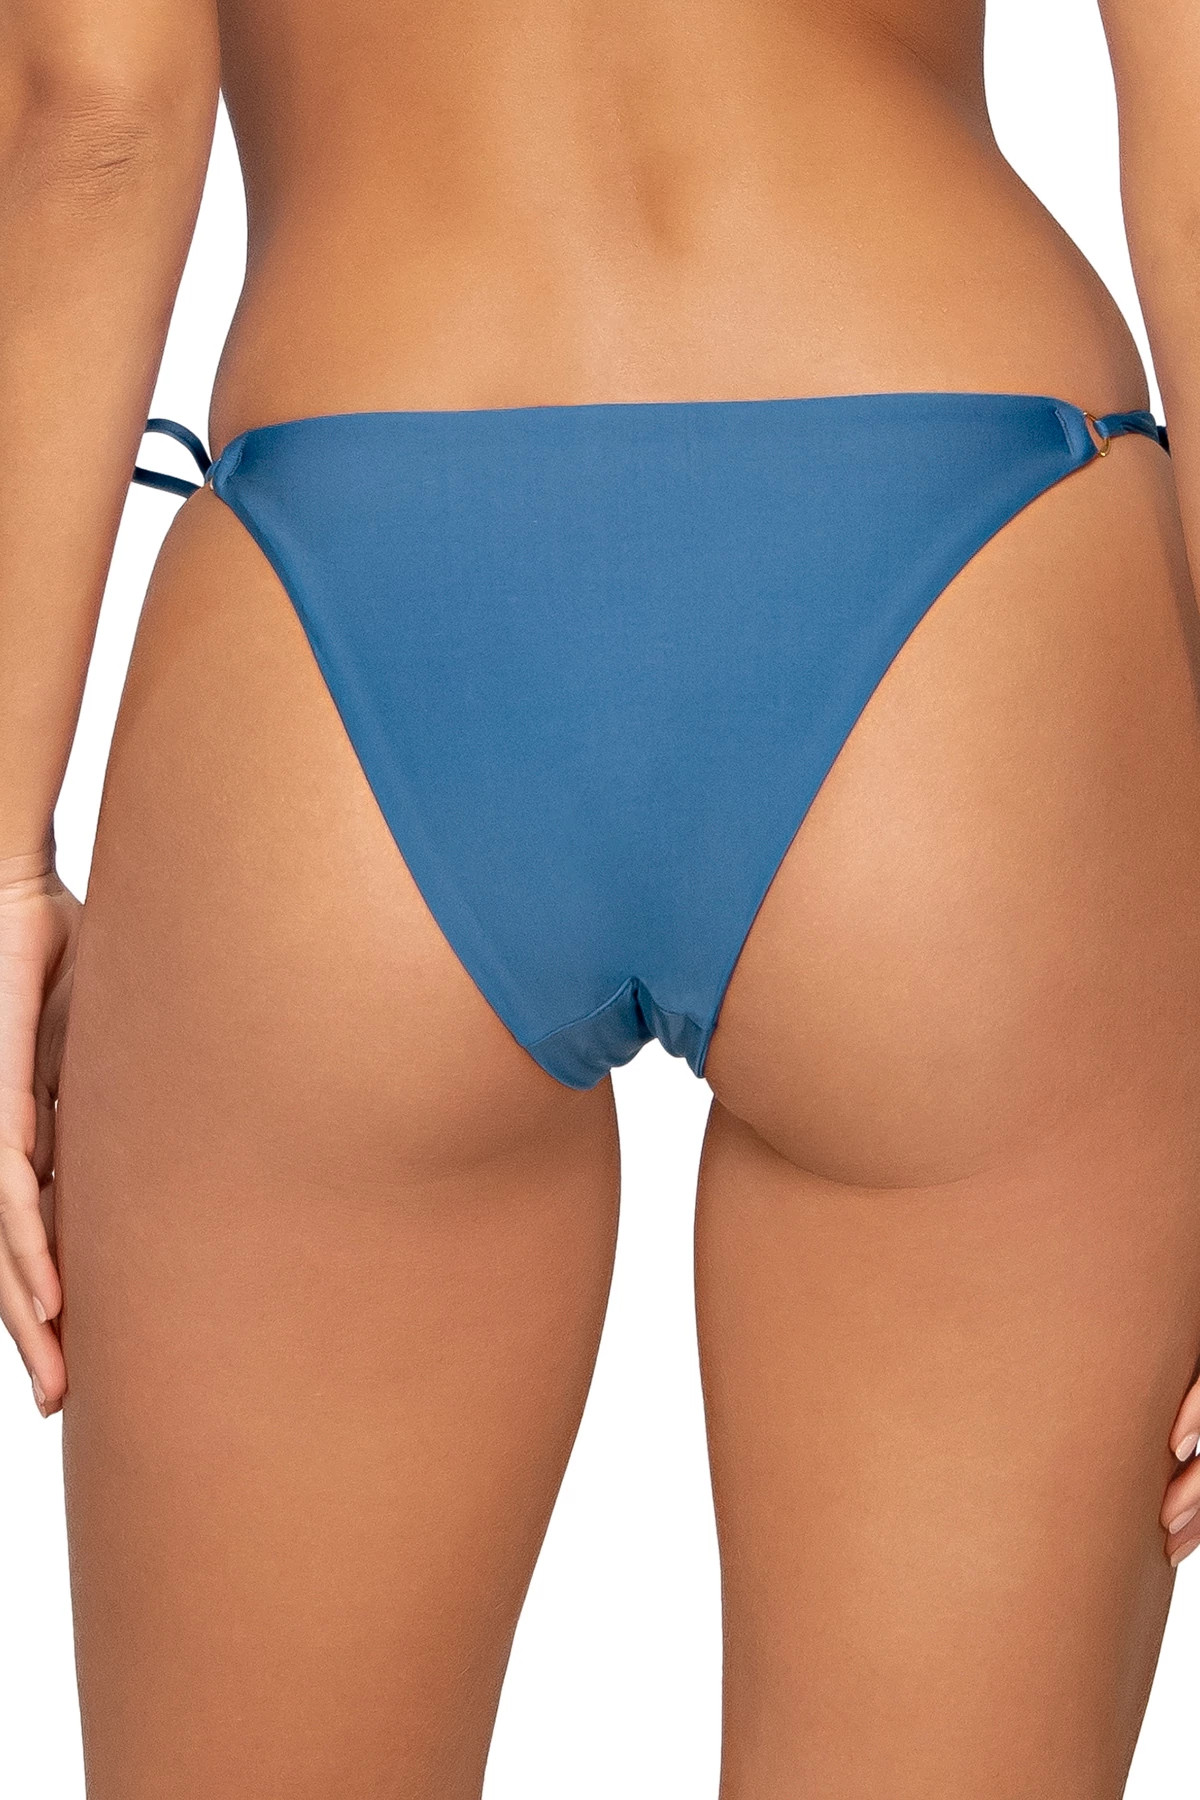 COTE D AZUR Venice Tie Side Brazilian Bikini Bottom image number 2